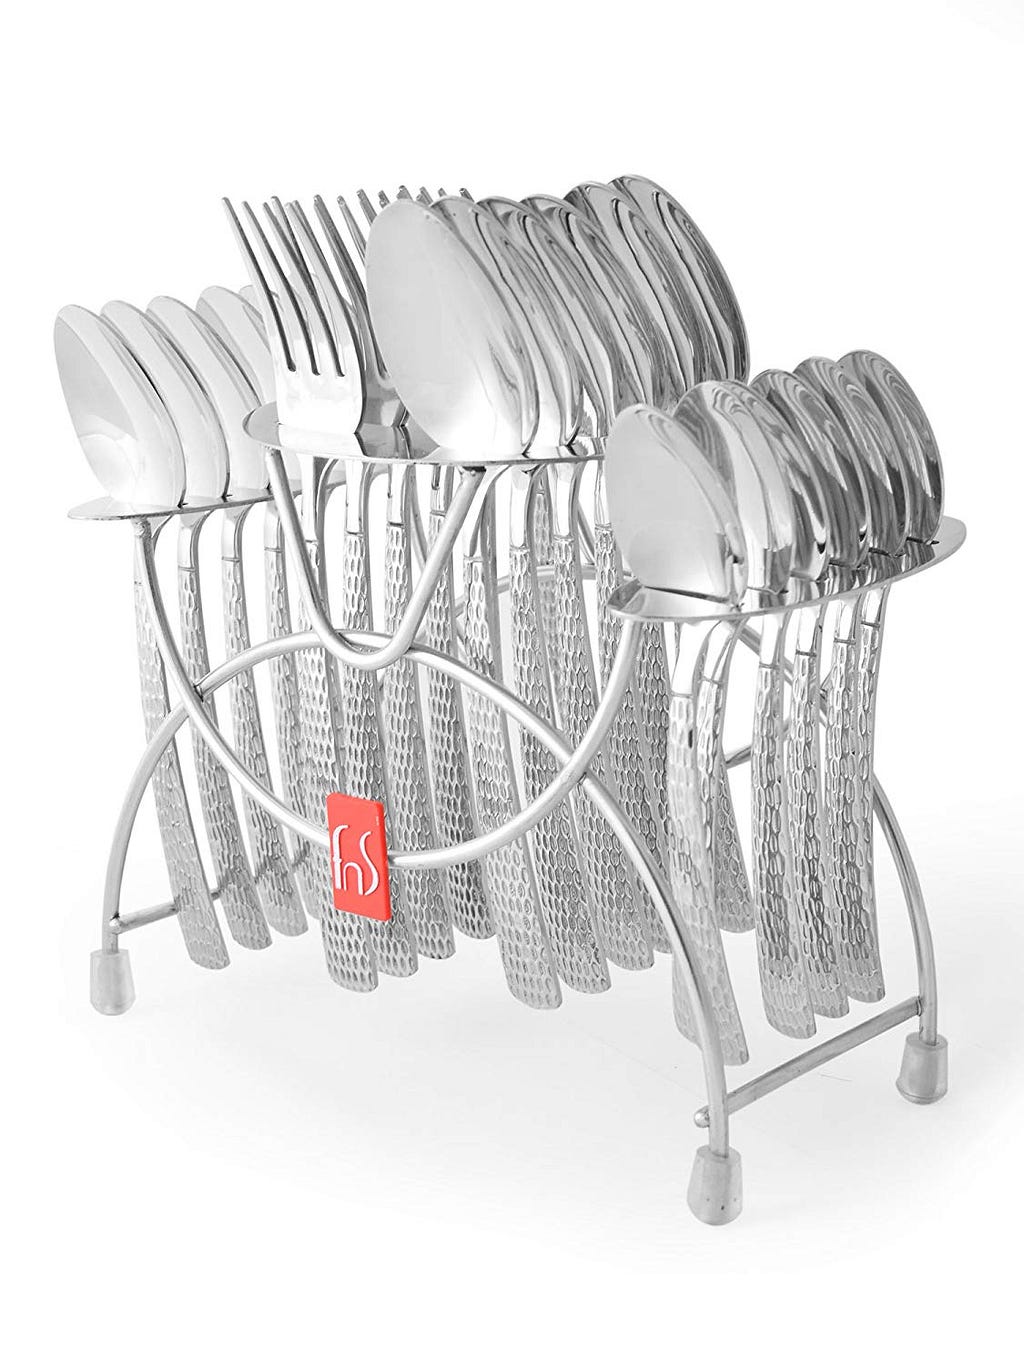 Shop Madrid 24 PCs Hanging Cutlery Sets Online